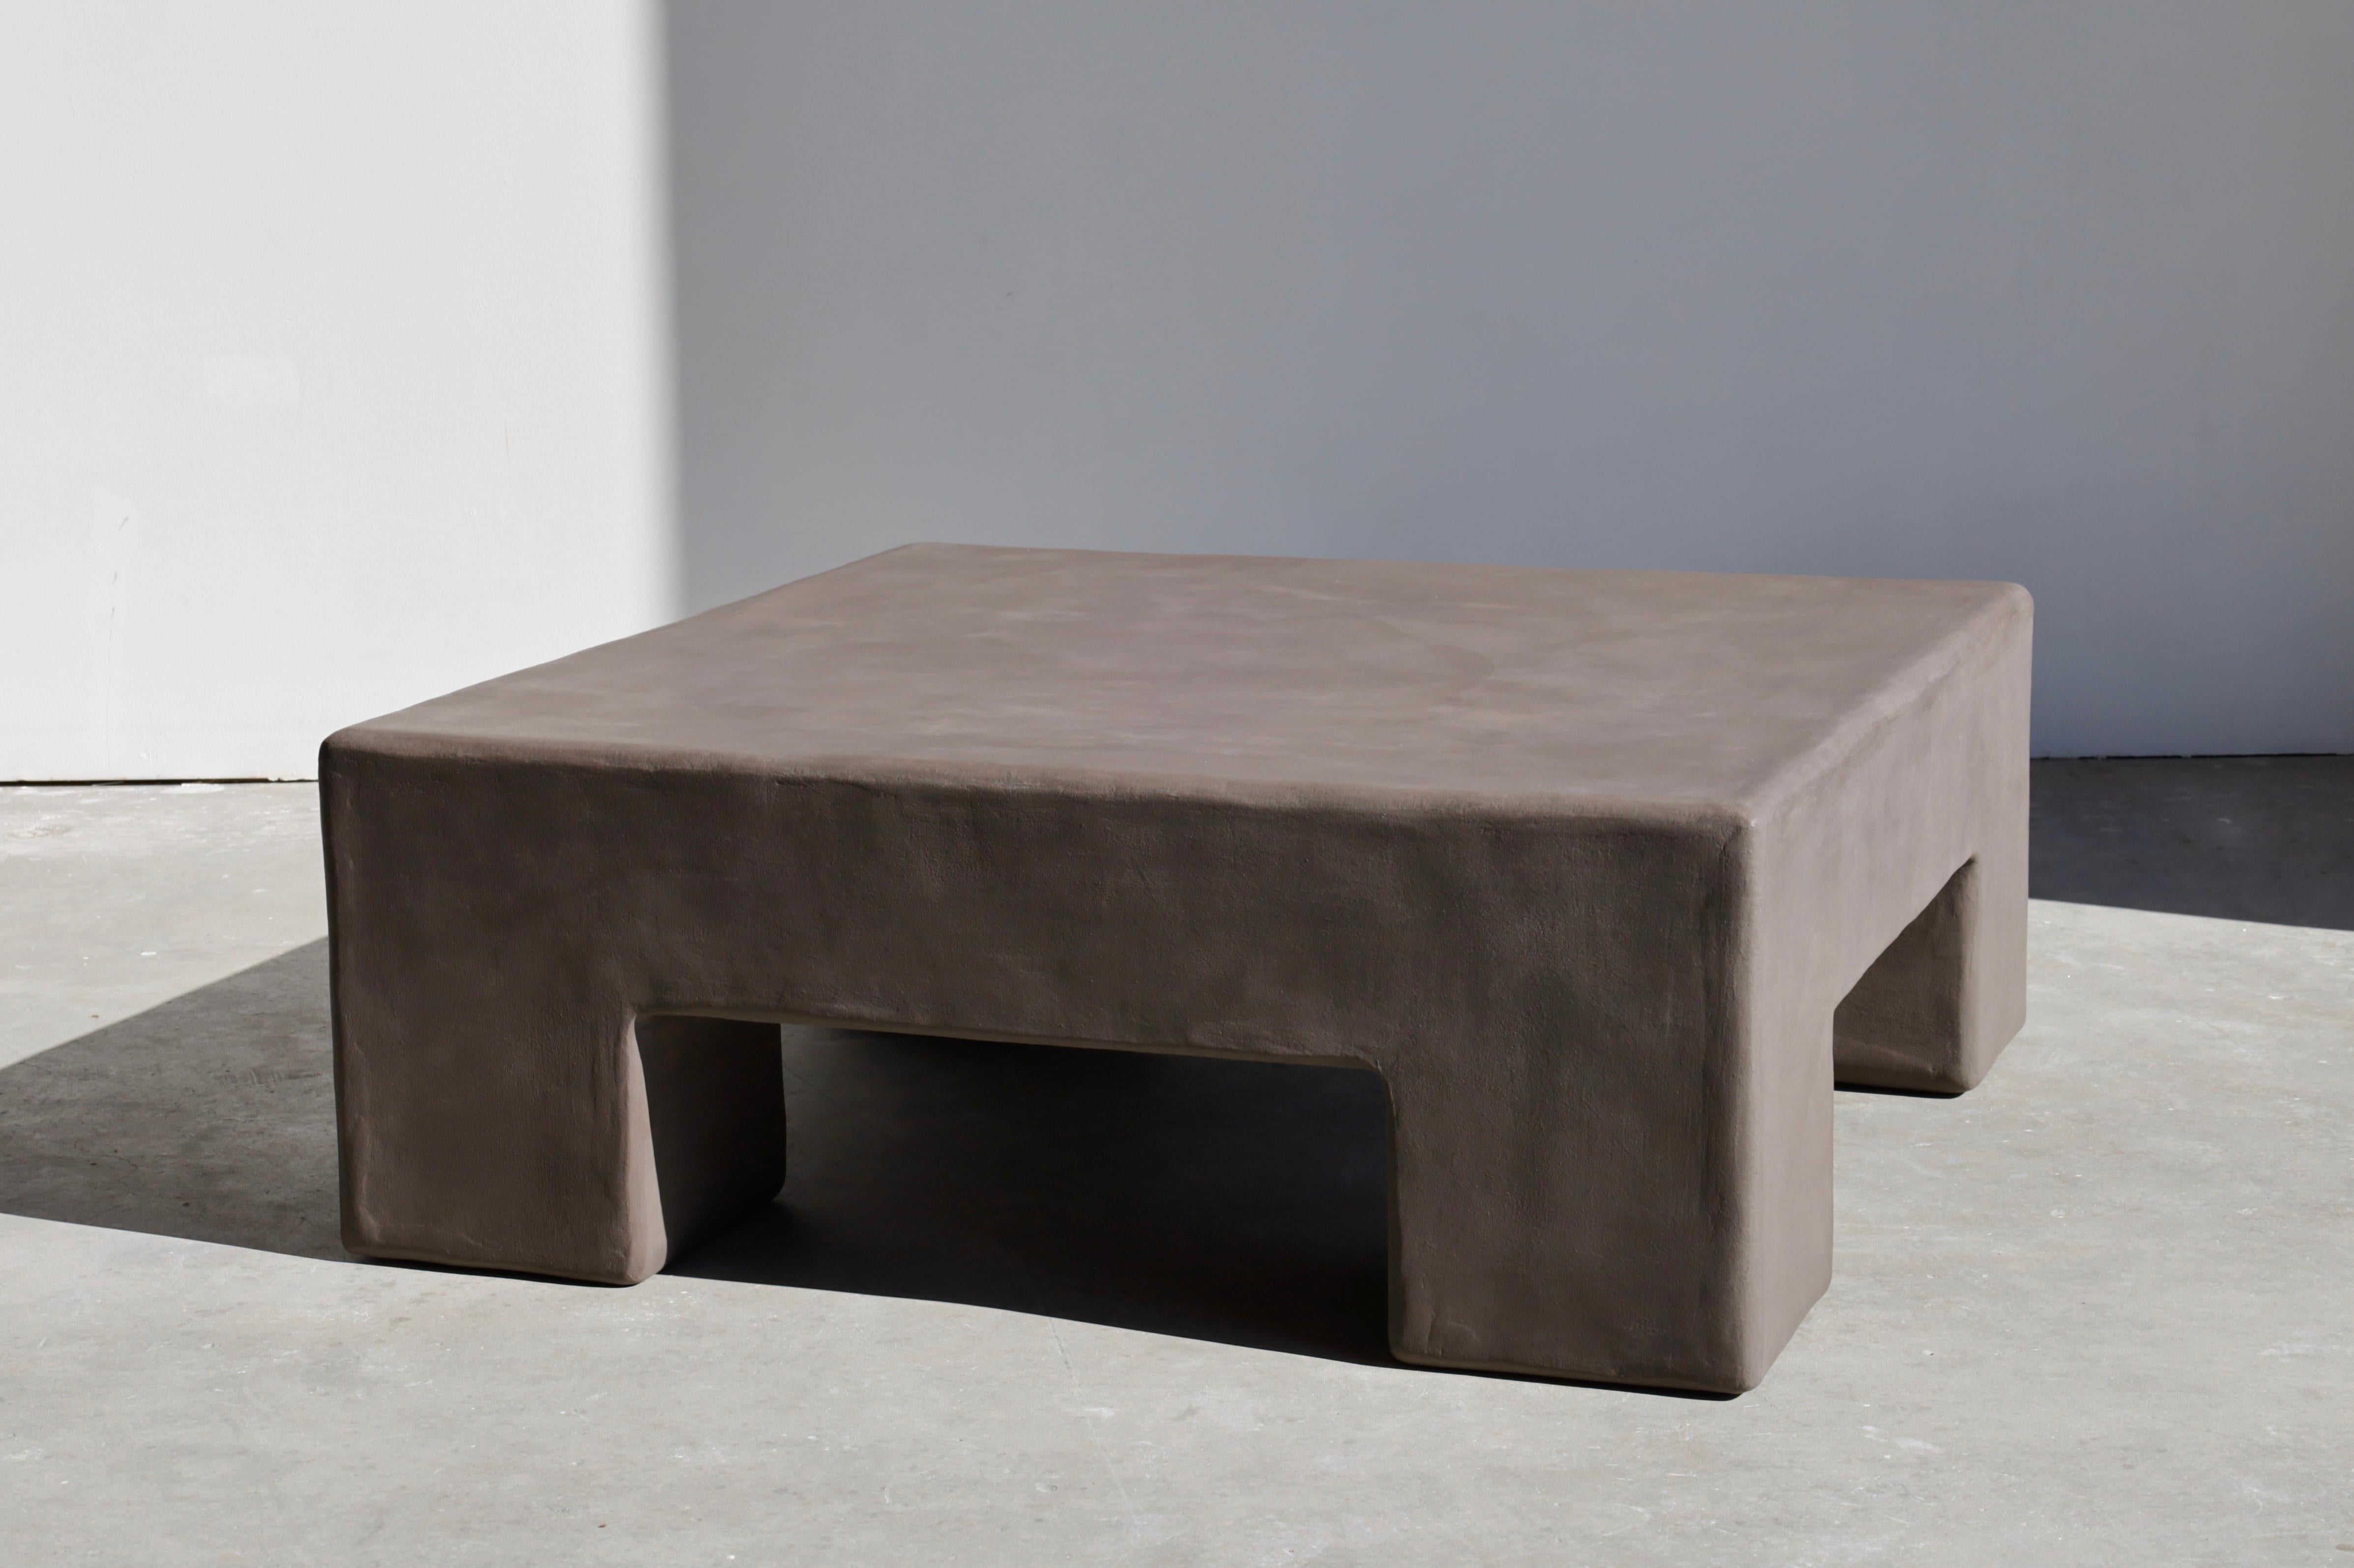 Minimalist scout minimalist plaster coffee table in atacama by öken house studios For Sale